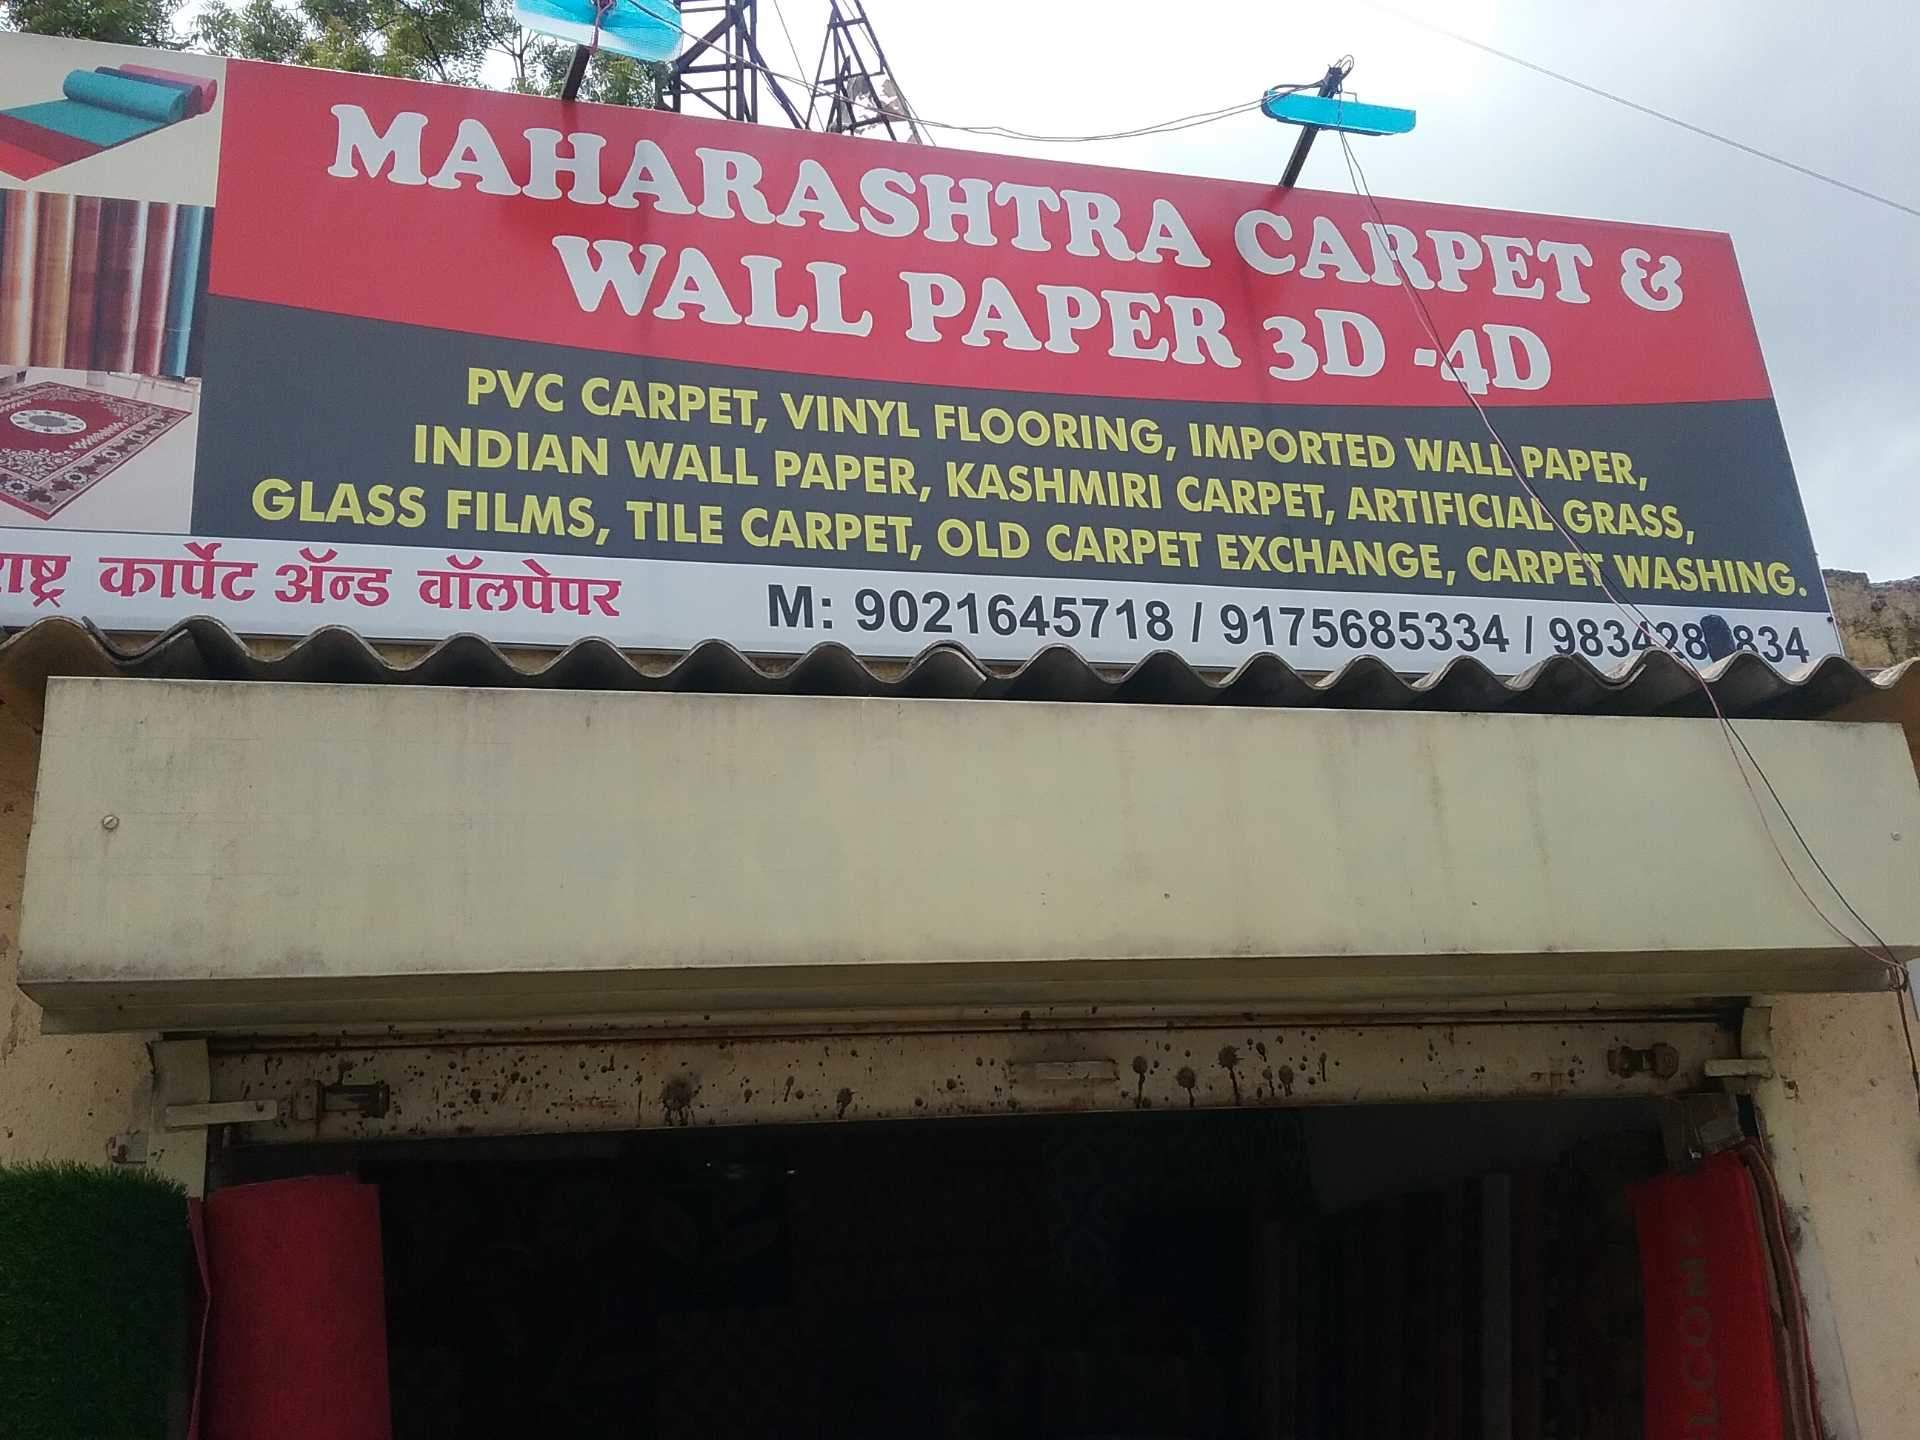 Maharashtra Carpet And Wallpaper 3d-4d Photos, Dighi, - Magaña , HD Wallpaper & Backgrounds